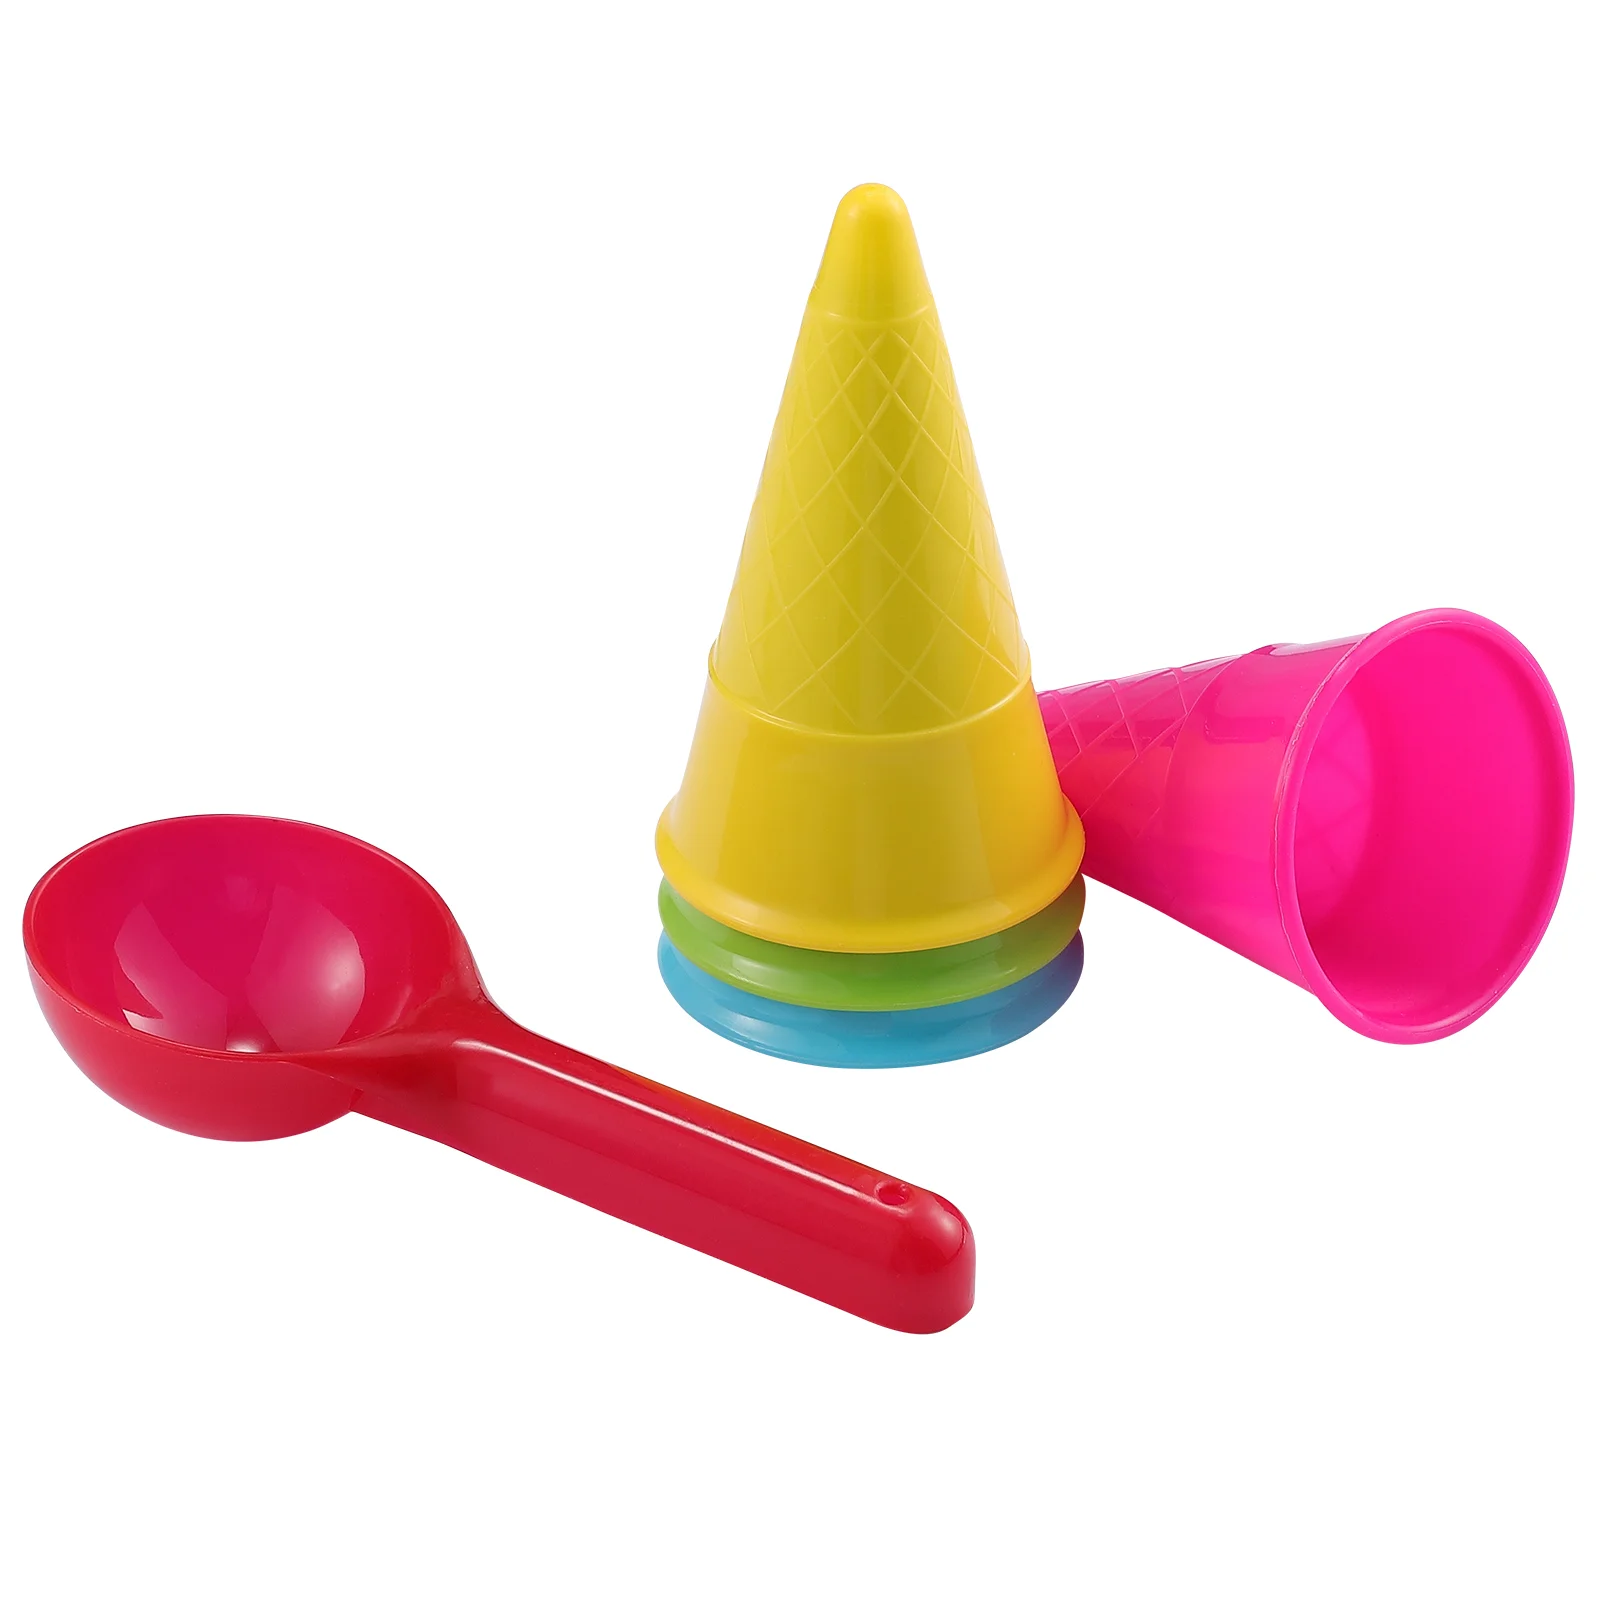 

Игрушка игрушечная игрушка Toyandona в виде конуса мороженого (5 шт./упаковка), 2 упаковки